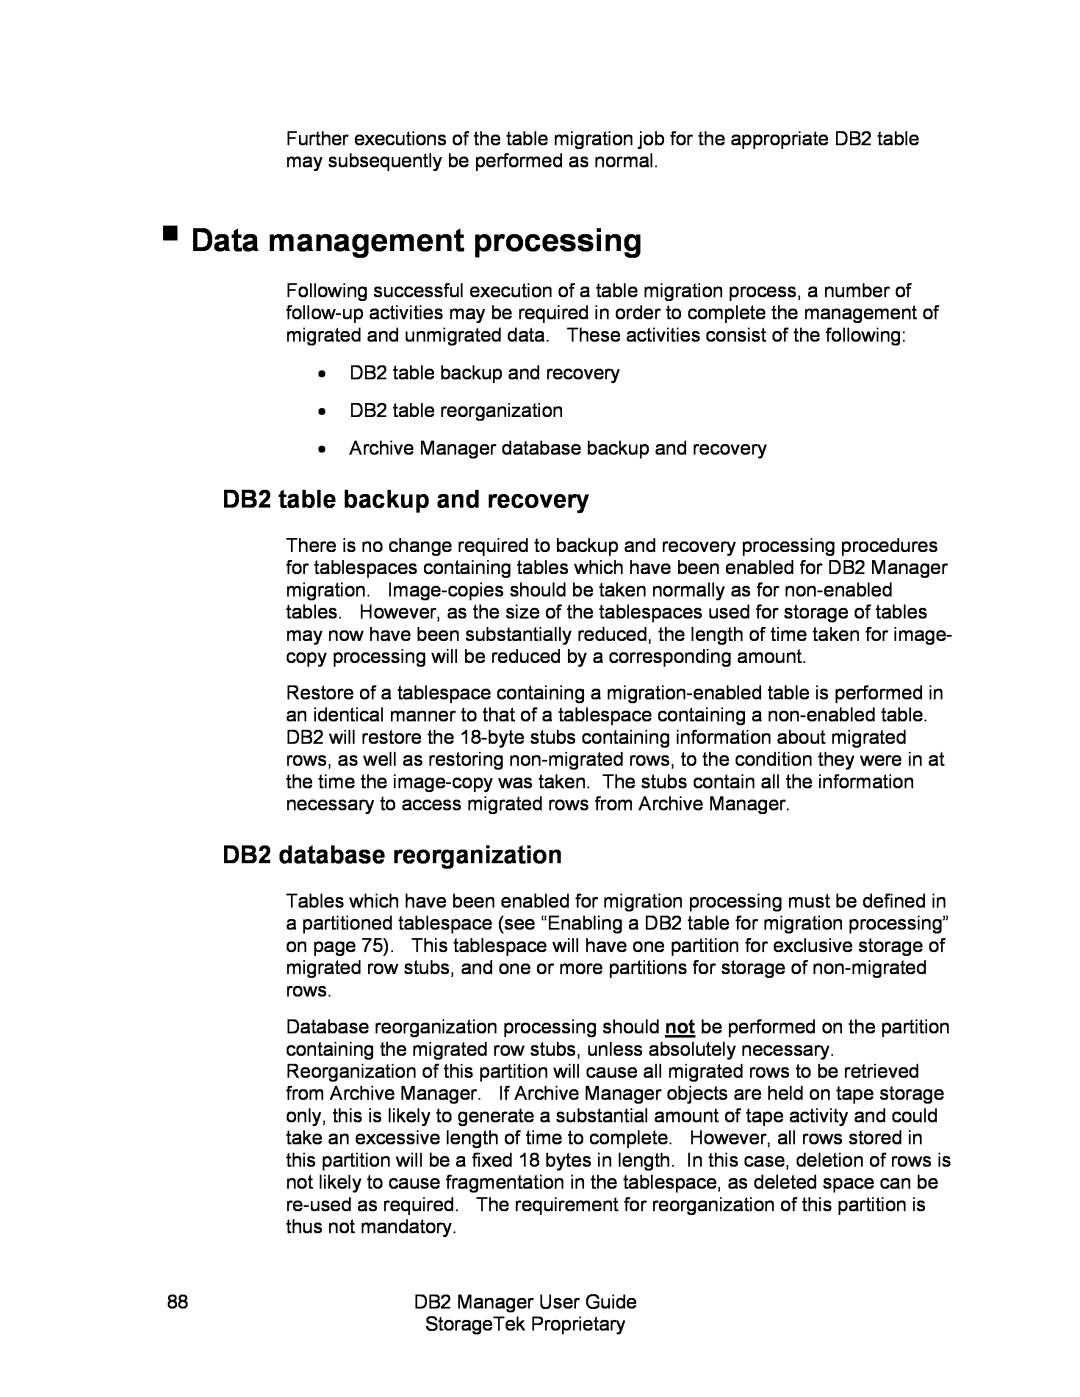 StorageTek 312564001 manual Data management processing, DB2 table backup and recovery, DB2 database reorganization 